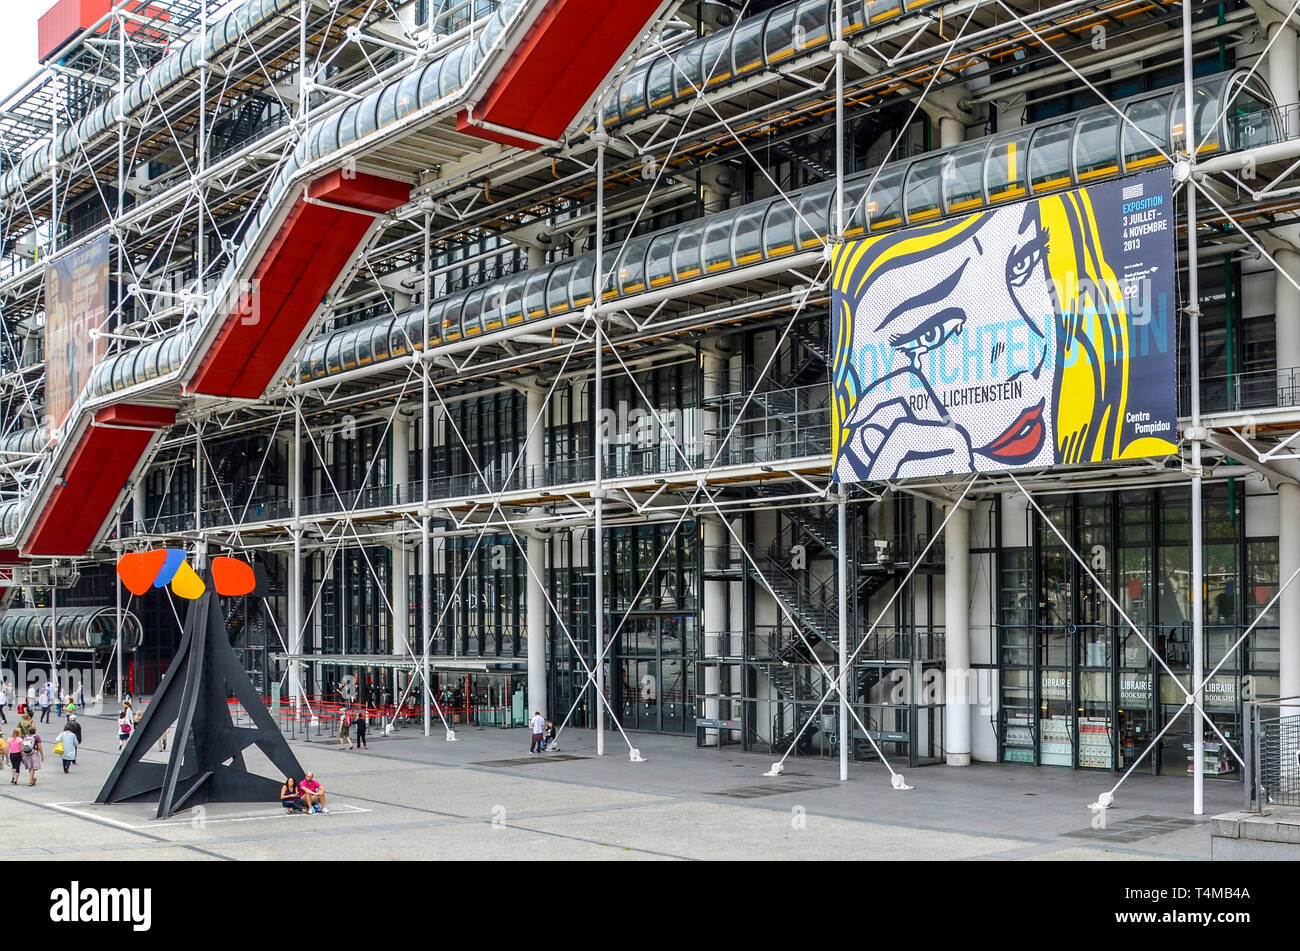 Roy Lichtenstein exhibition display advertising board at the Centre Georges Pompidou, Pompidou Centre, art museum exterior,  Musée National d'Art Stock Photo